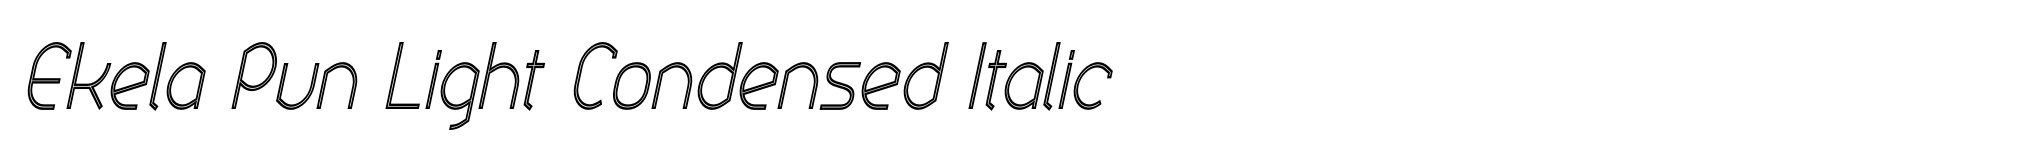 Ekela Pun Light Condensed Italic image